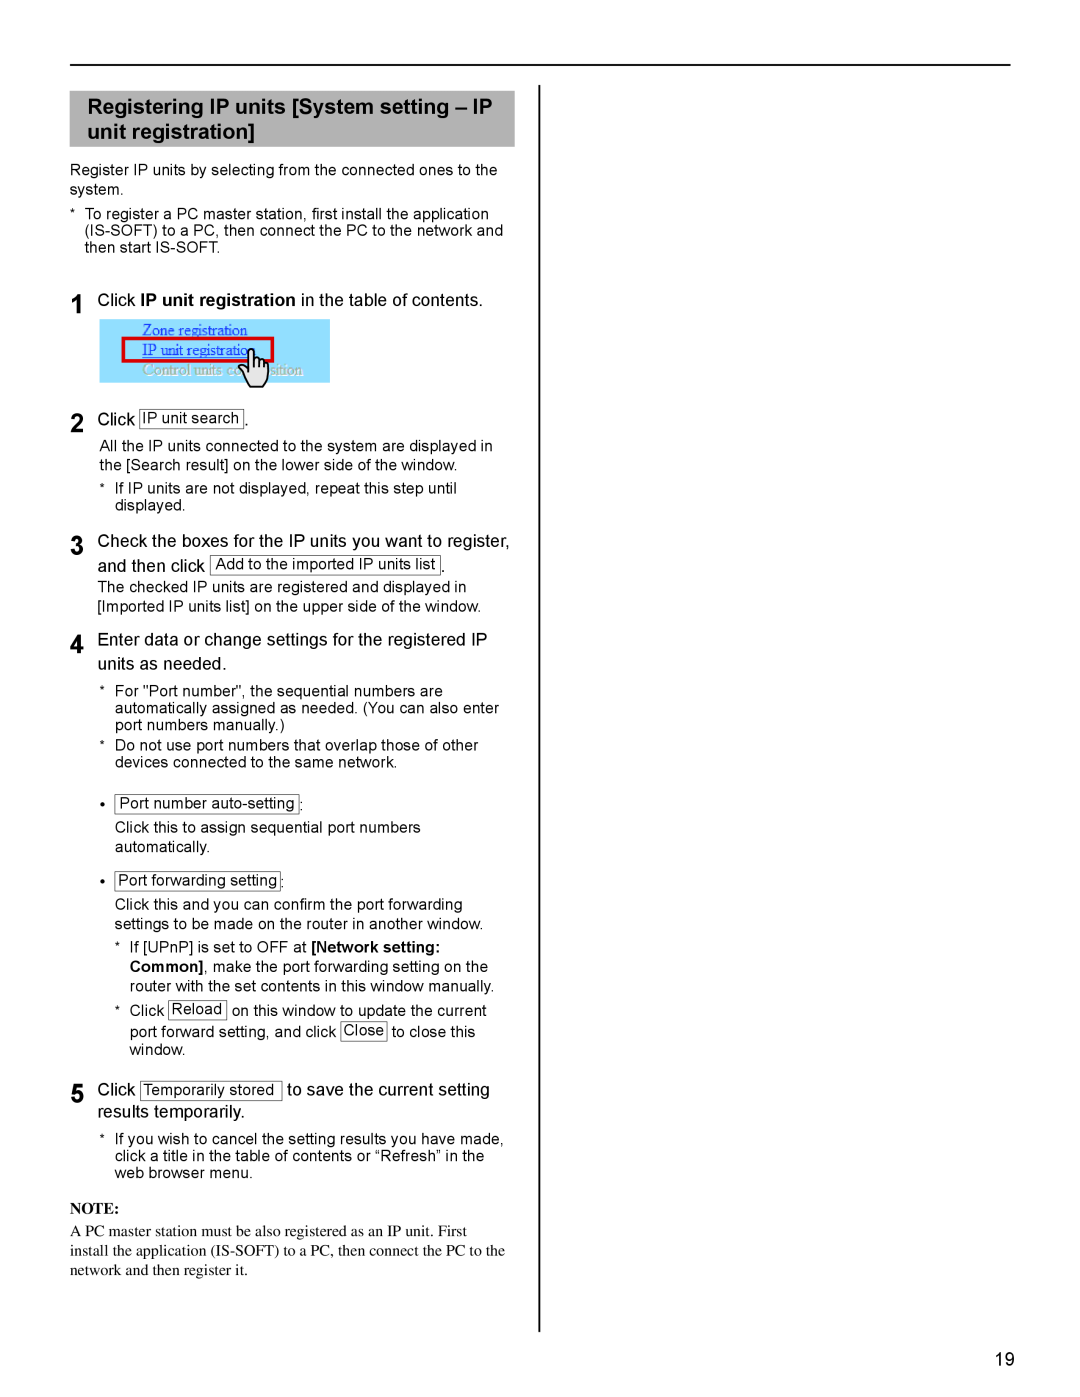 Aiphone FK1629 B 0811YZ operation manual Registering IP units System setting - IP unit registration 